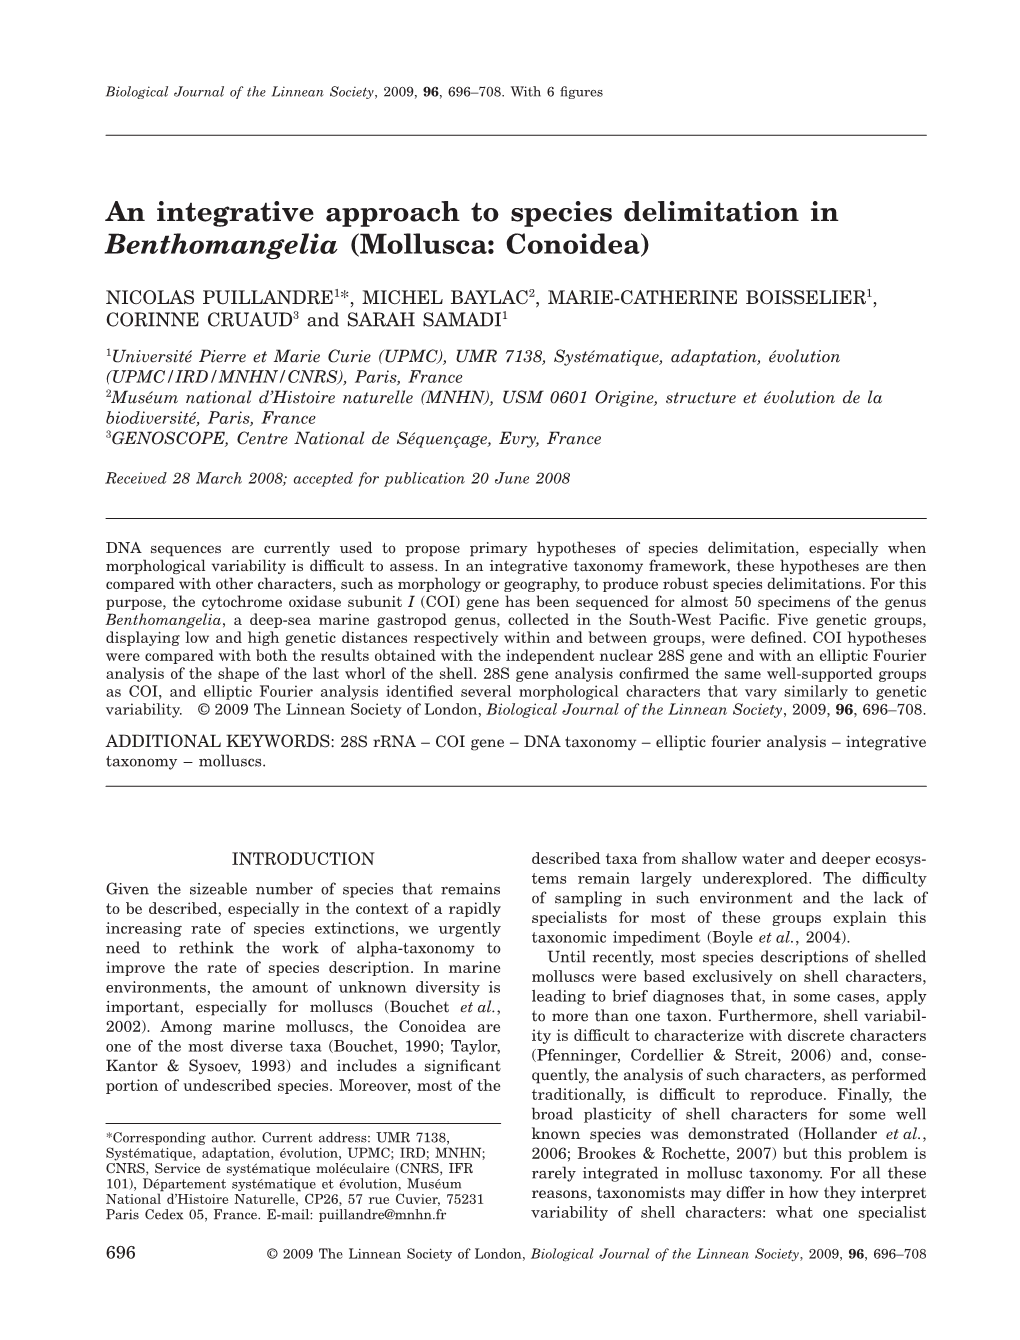 An Integrative Approach to Species Delimitation in Benthomangelia (Mollusca: Conoidea)